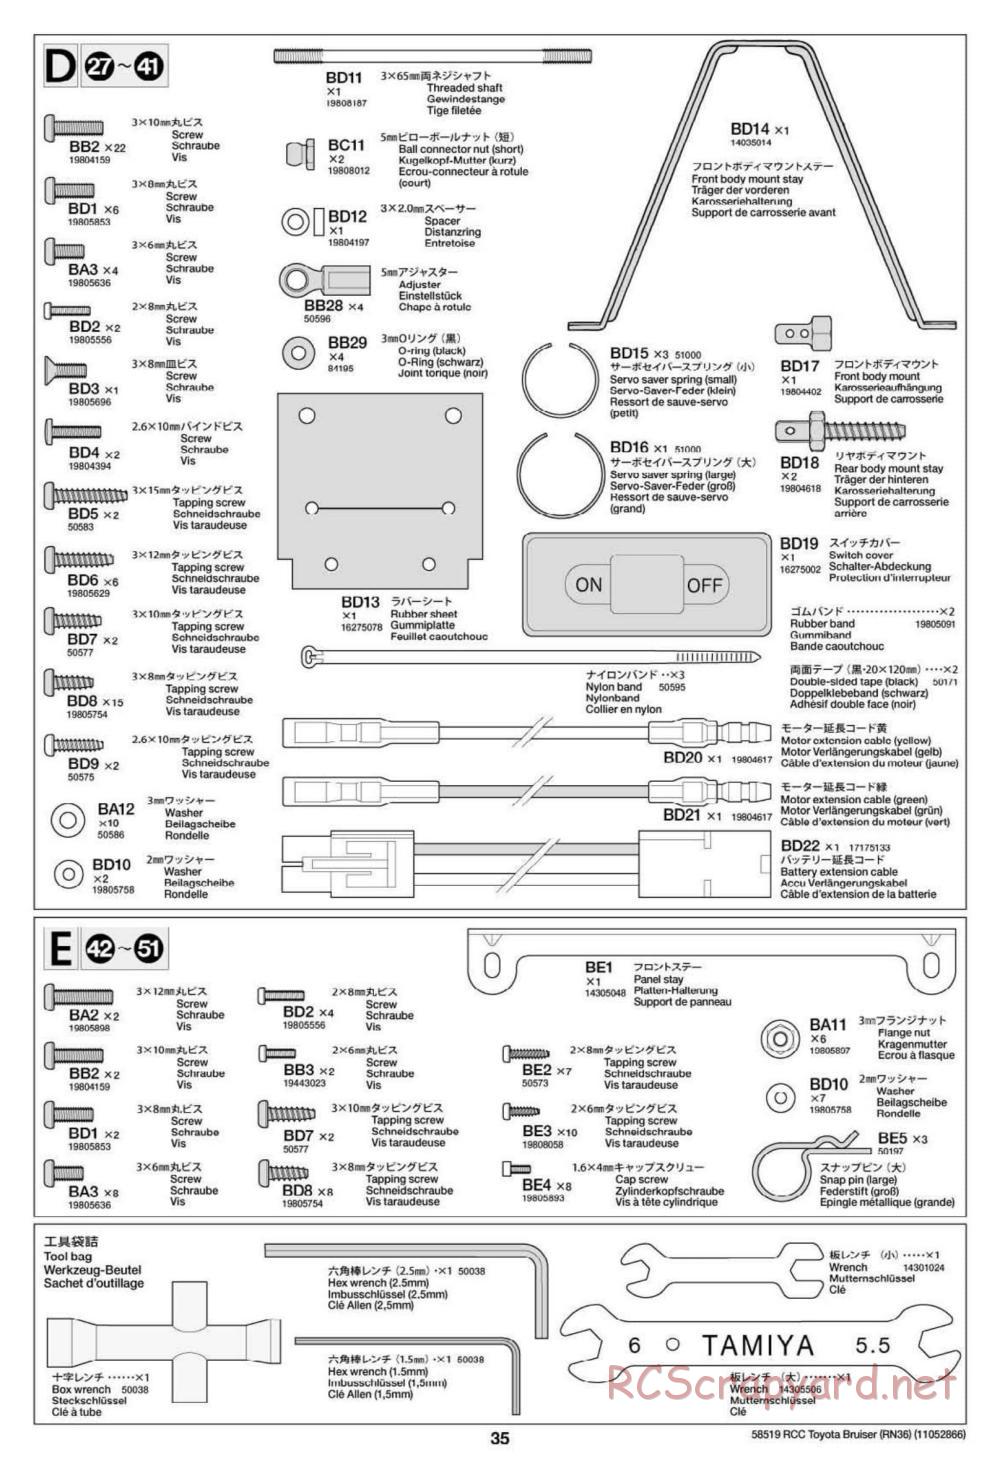 Tamiya - Toyota 4x4 Pick Up Bruiser Chassis - Manual - Page 35